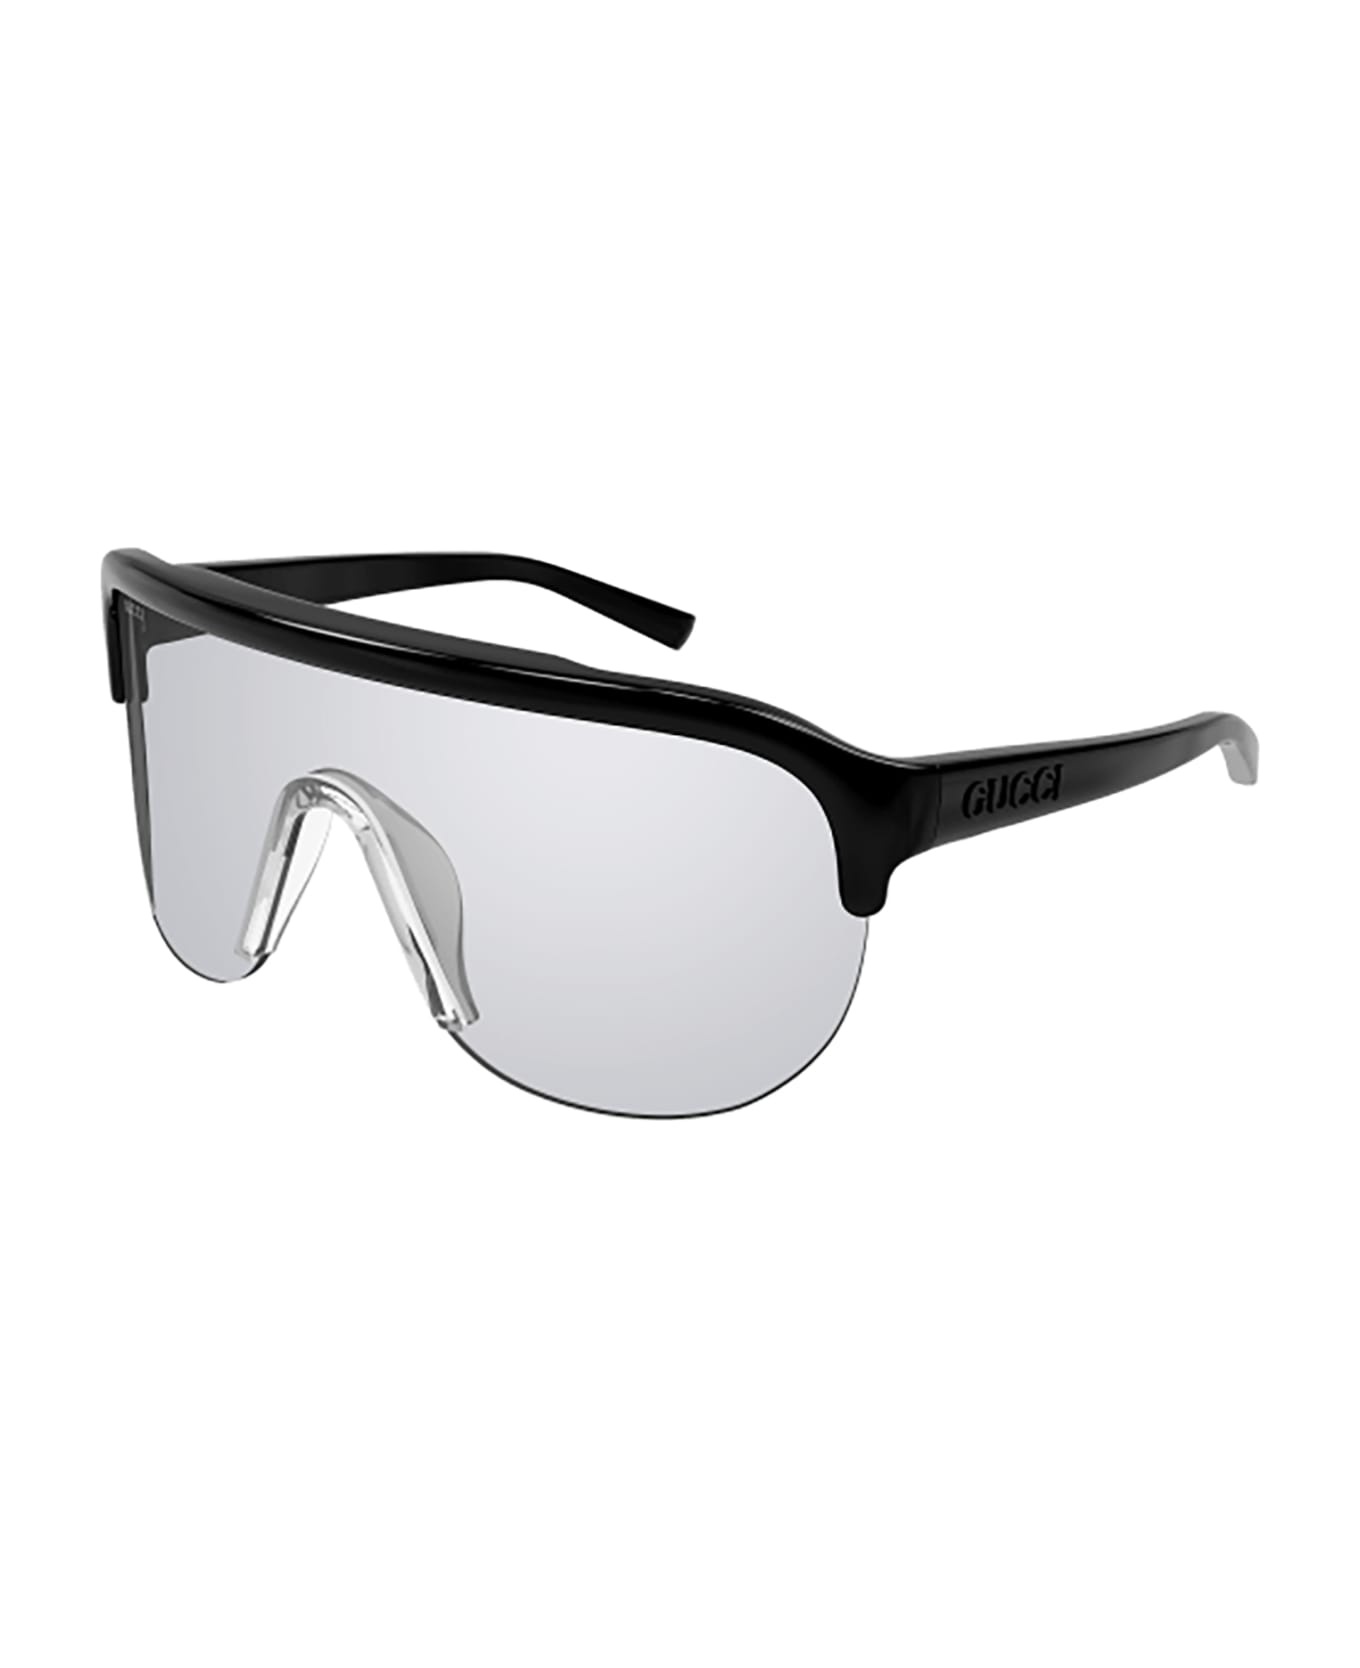 GG1645S Sunglasses - 2